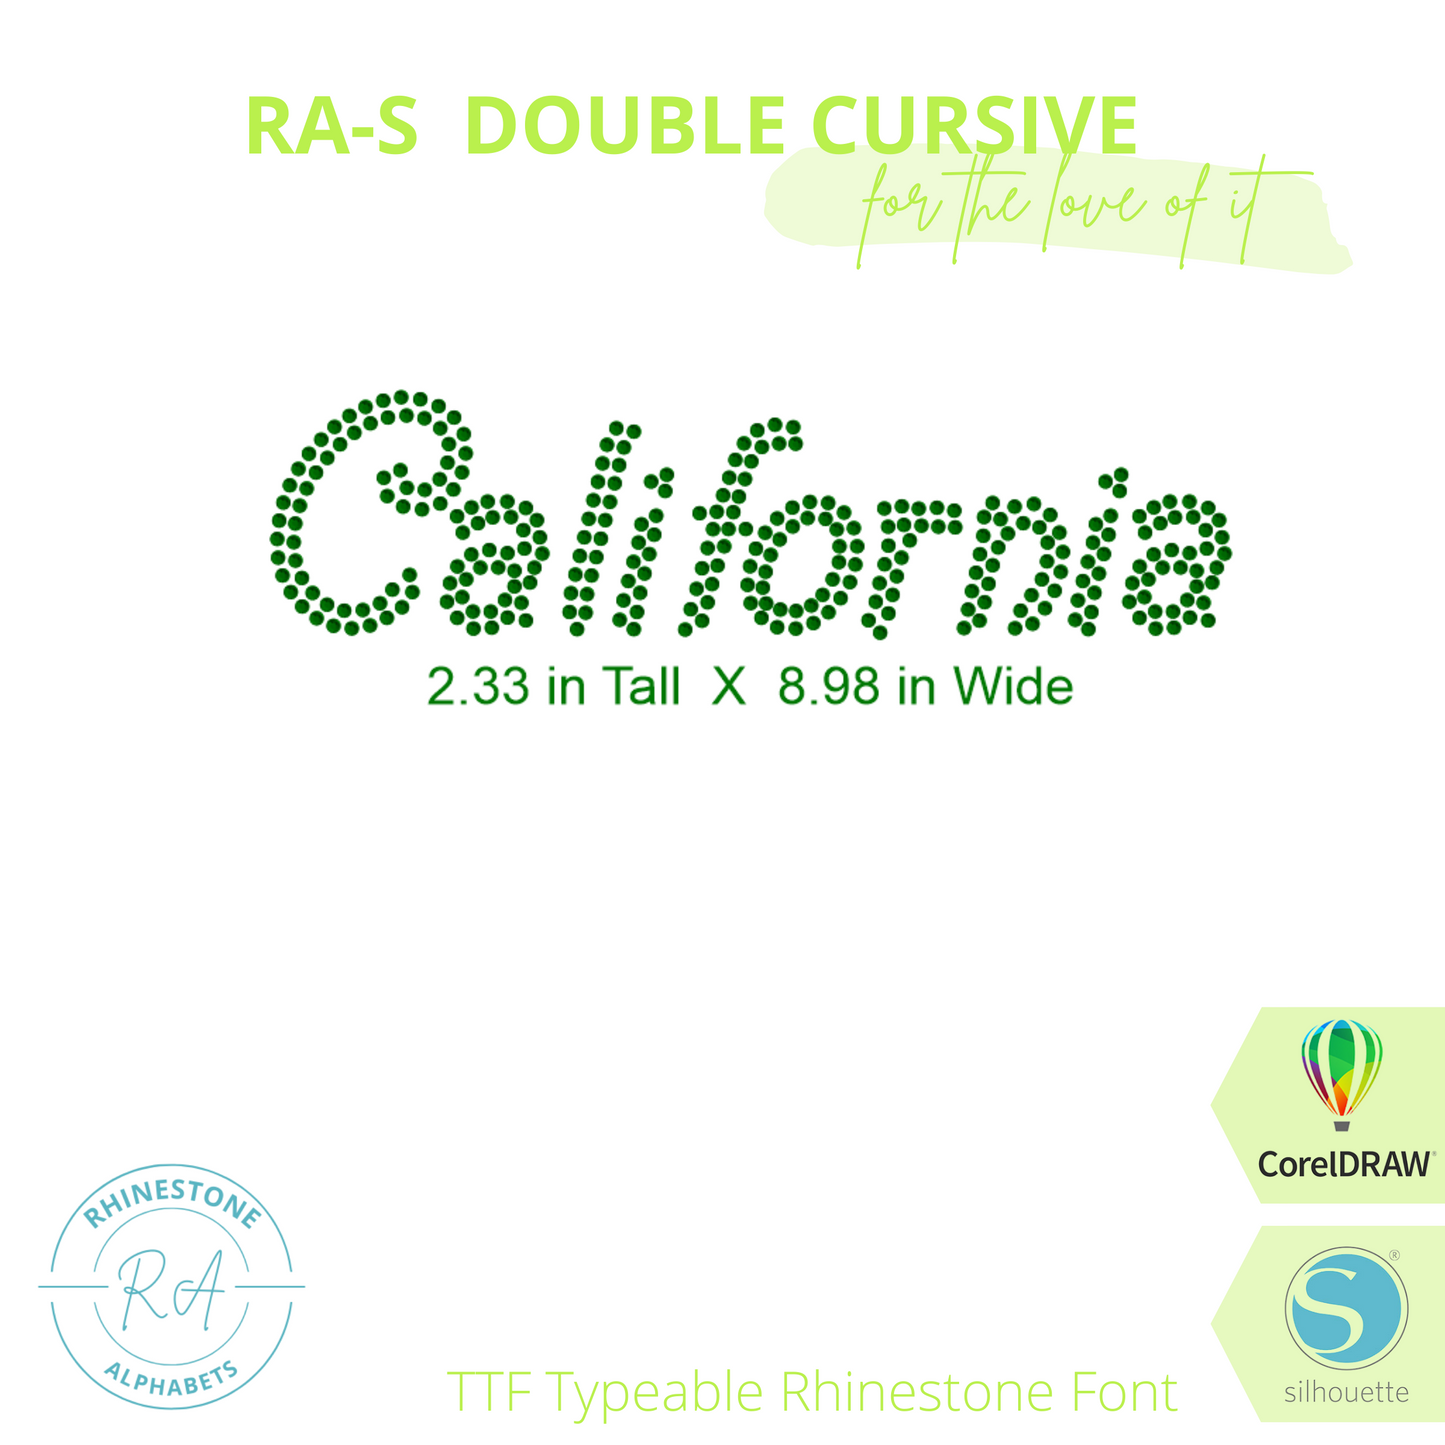 RA-S DoubleCursive - RhinestoneAlphabets